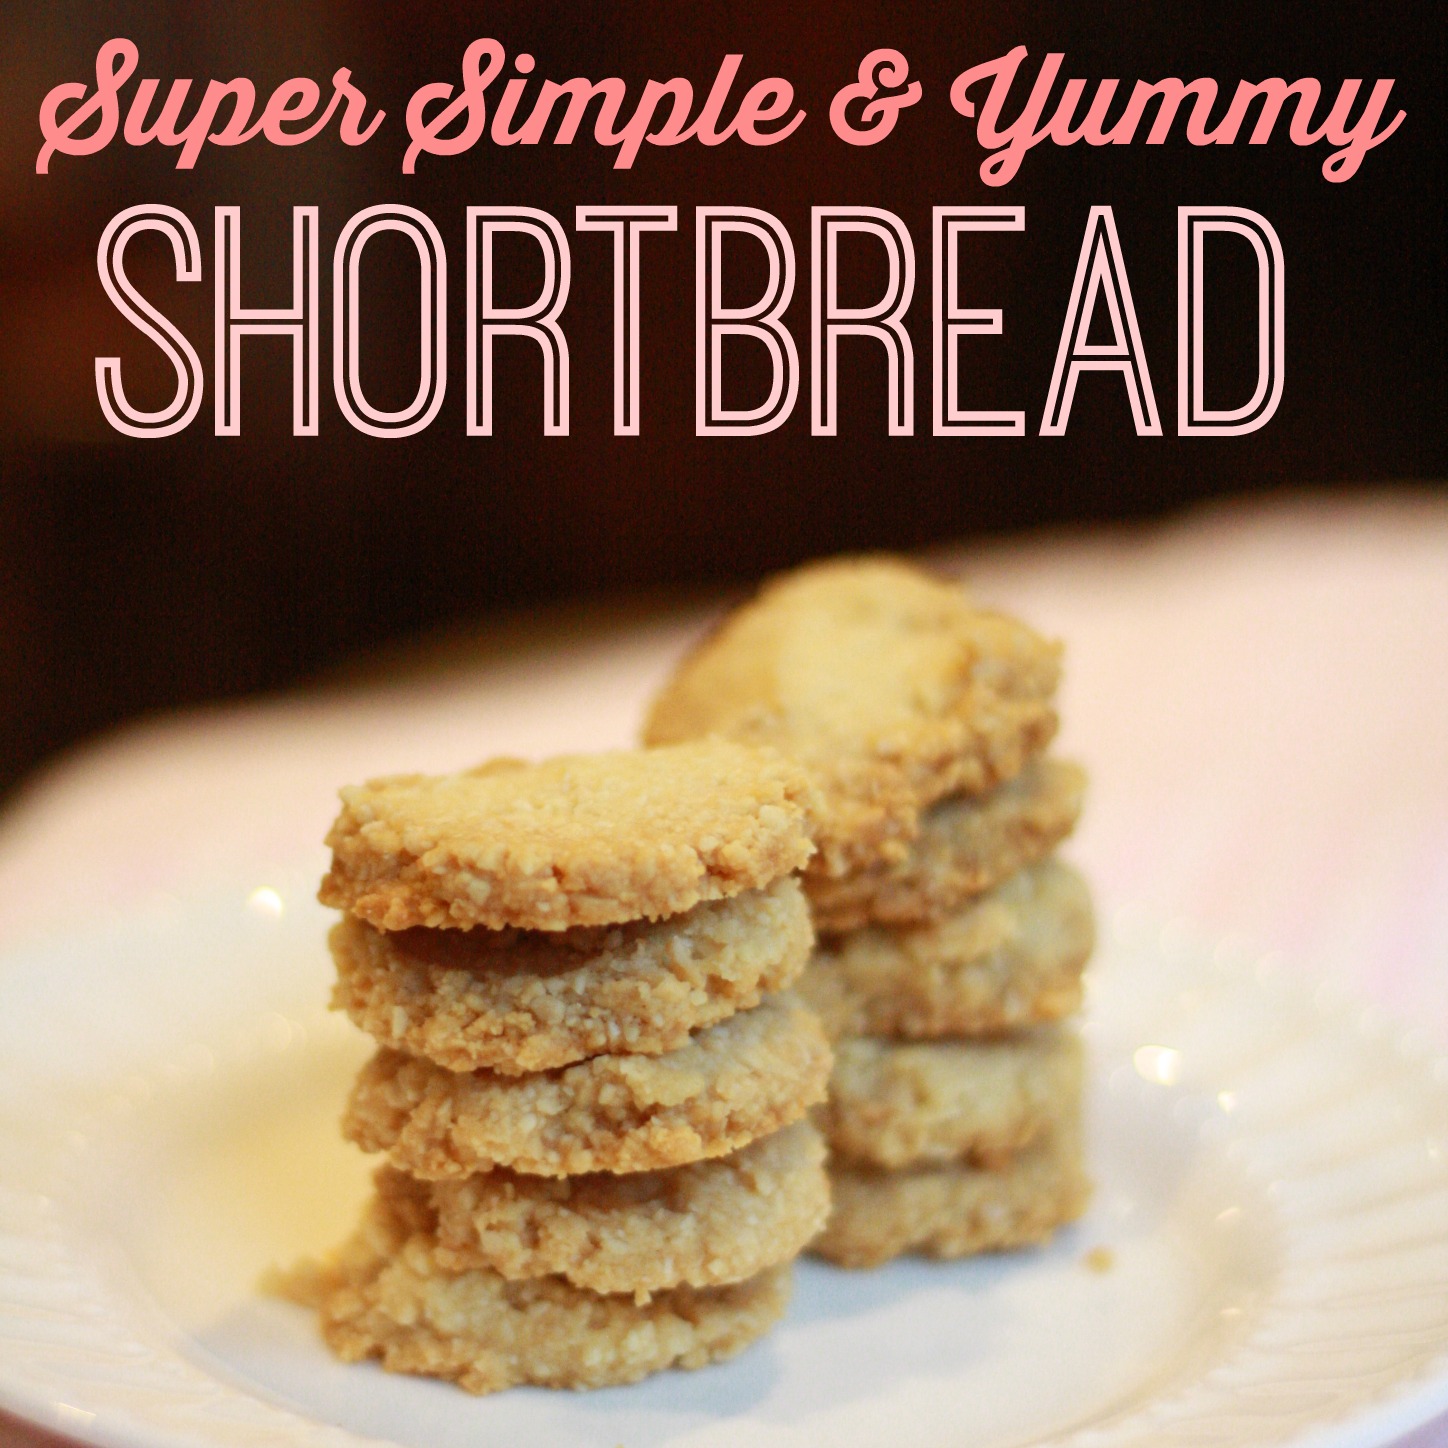 Super Simper Yummy Shortbread s